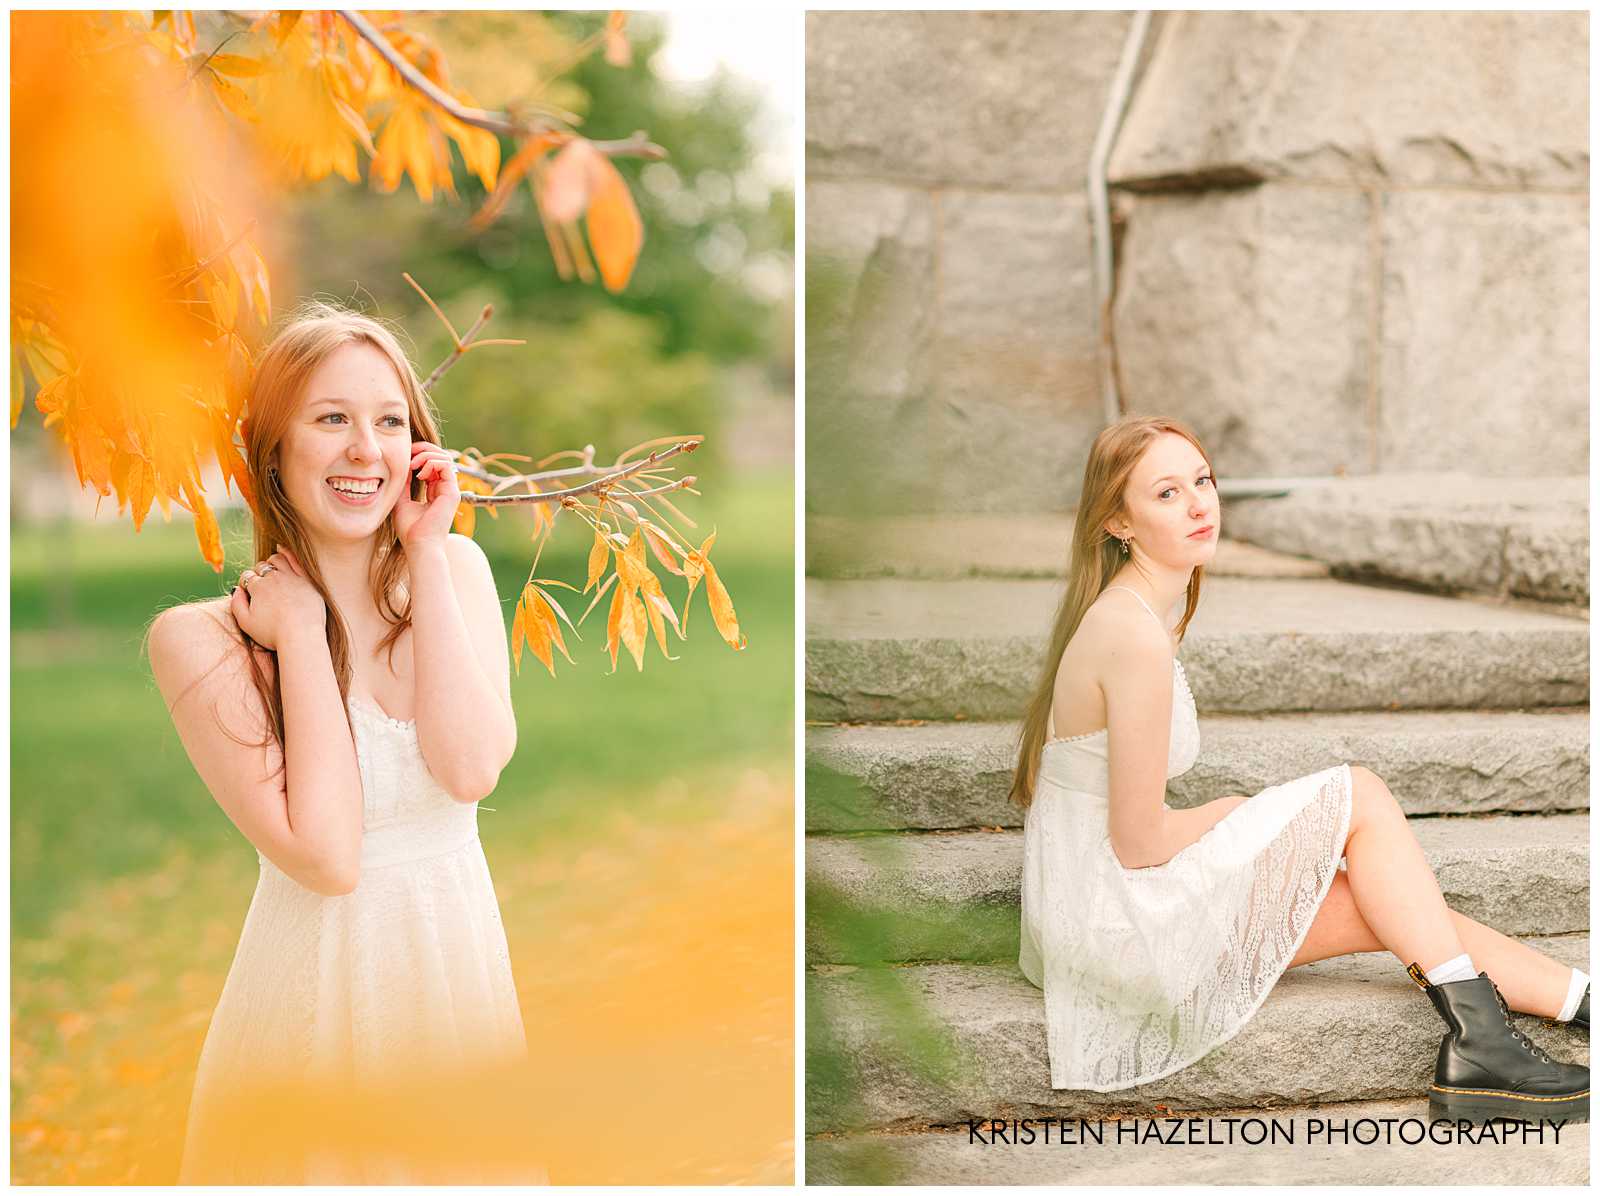 High school senior photos with fall leaves by Chicago Senior Photographer Kristen Hazelton